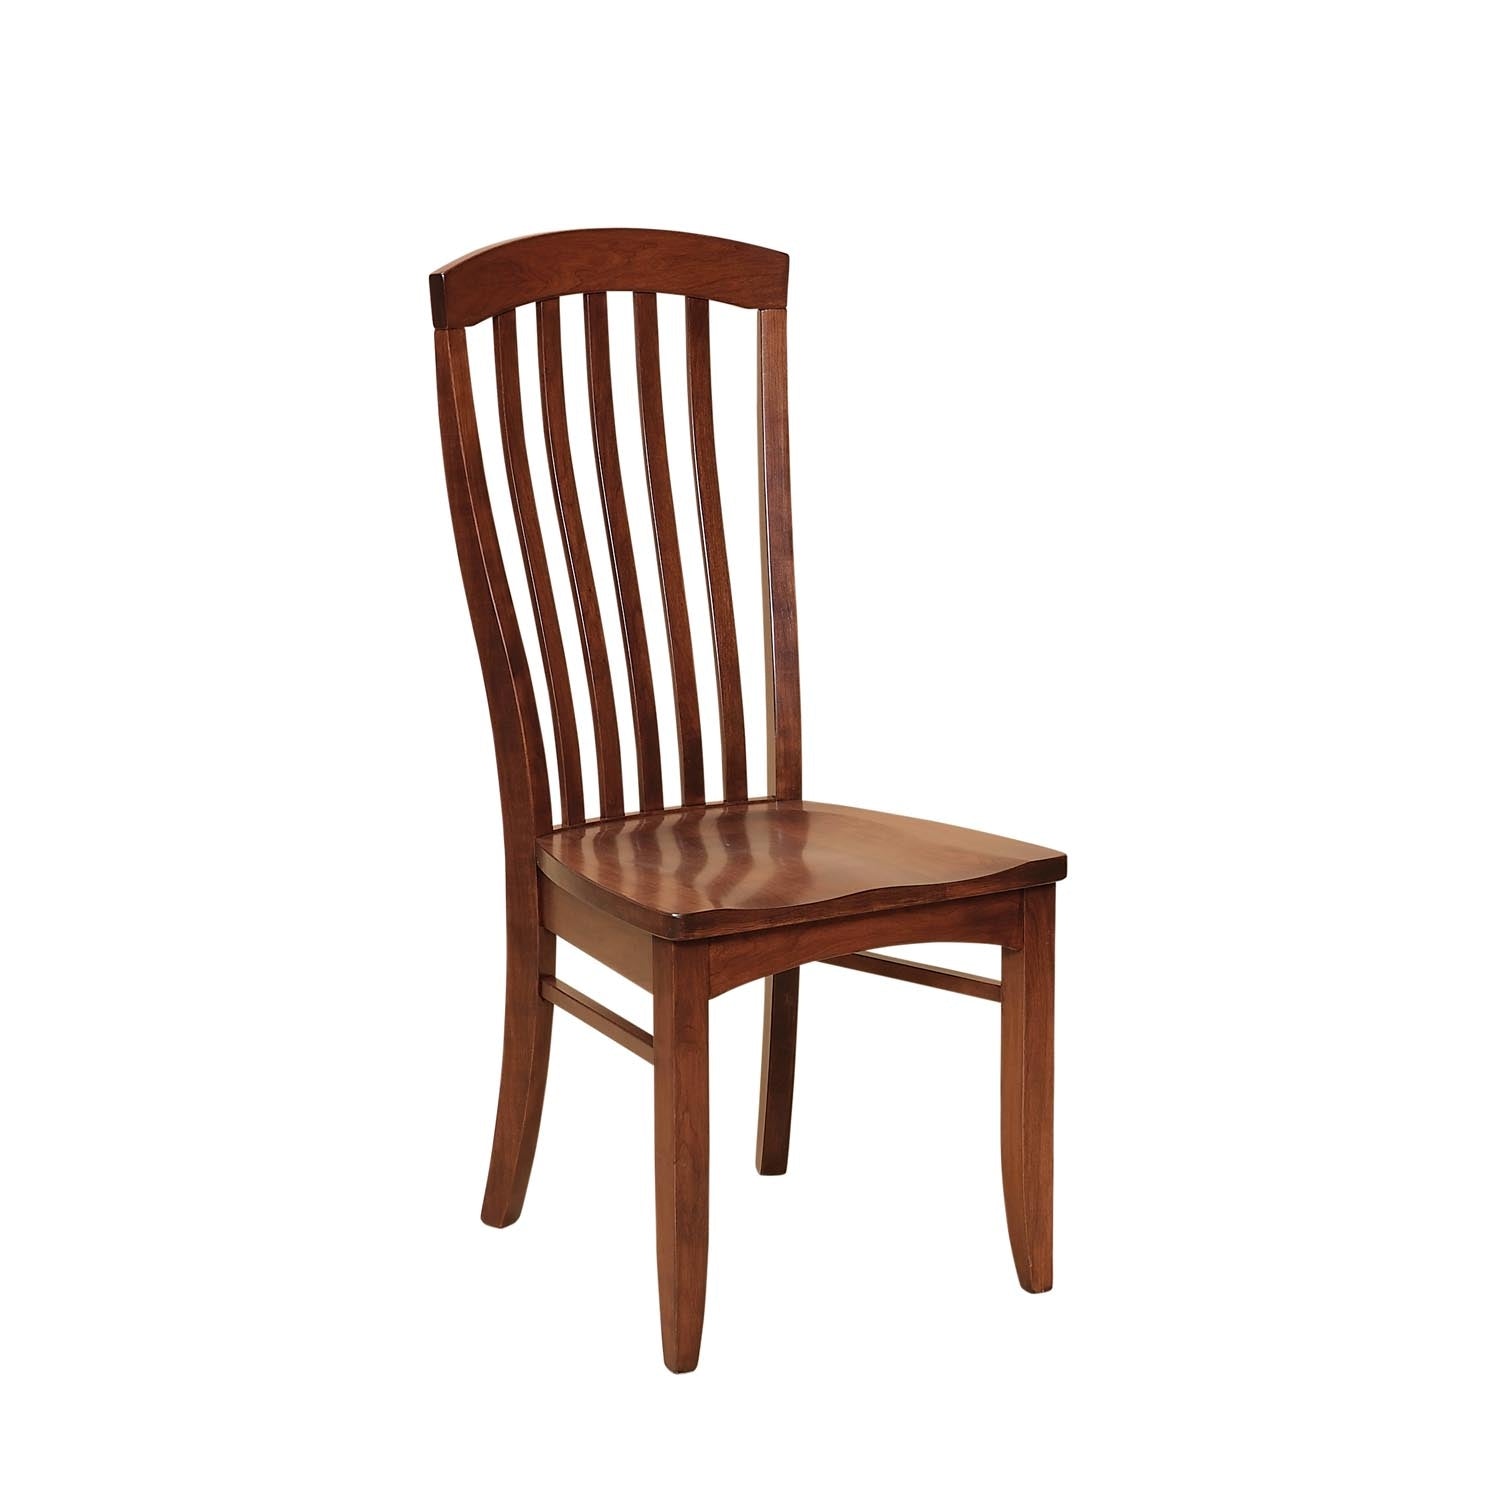 Malibu Chair - snyders.furniture